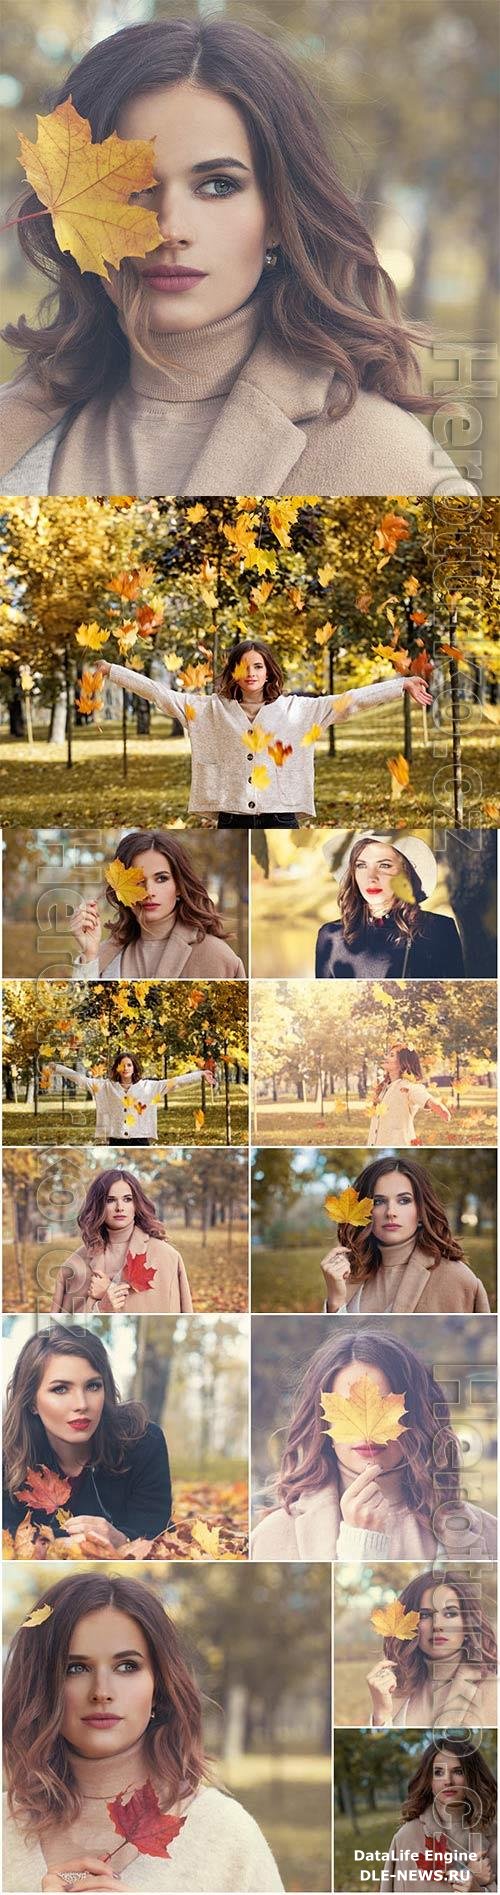 Girls and golden autumn stock photo